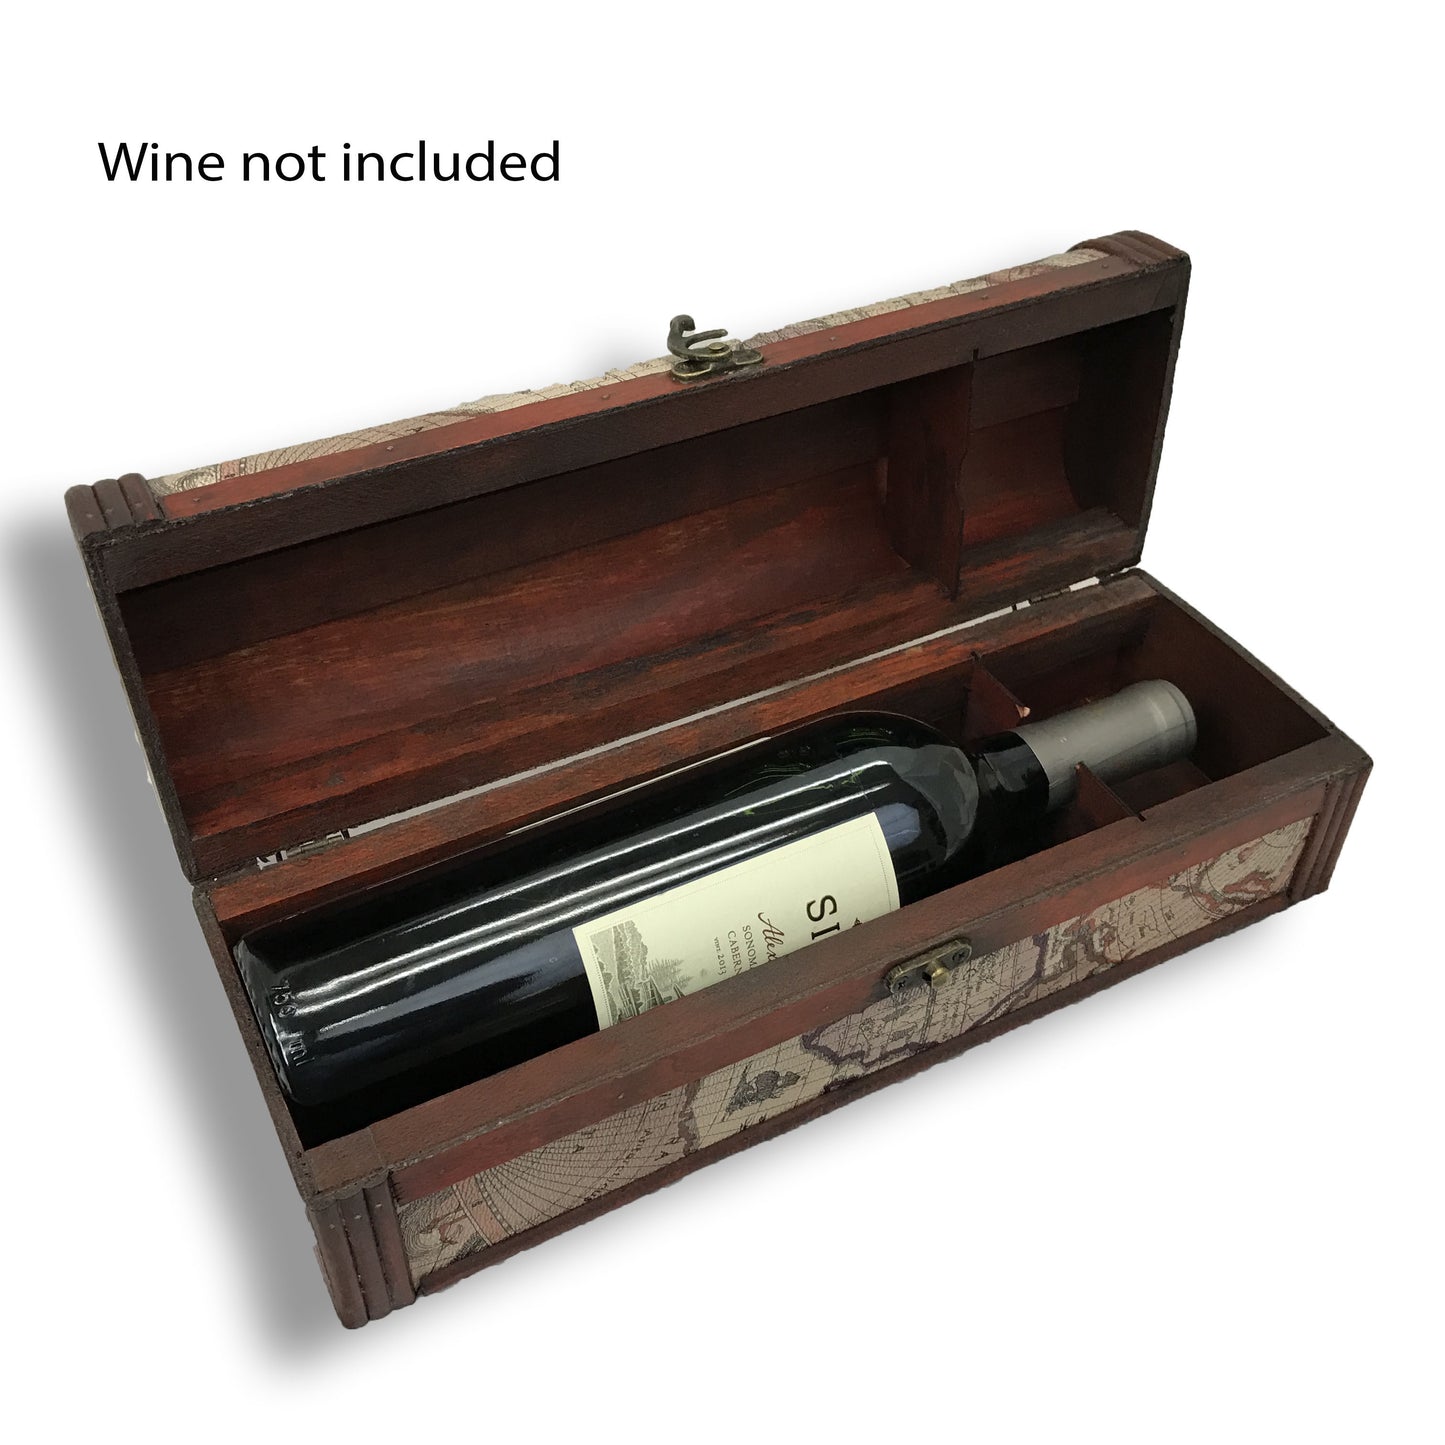 Allgala Wooden Wine Bottle Box with Antique Finish